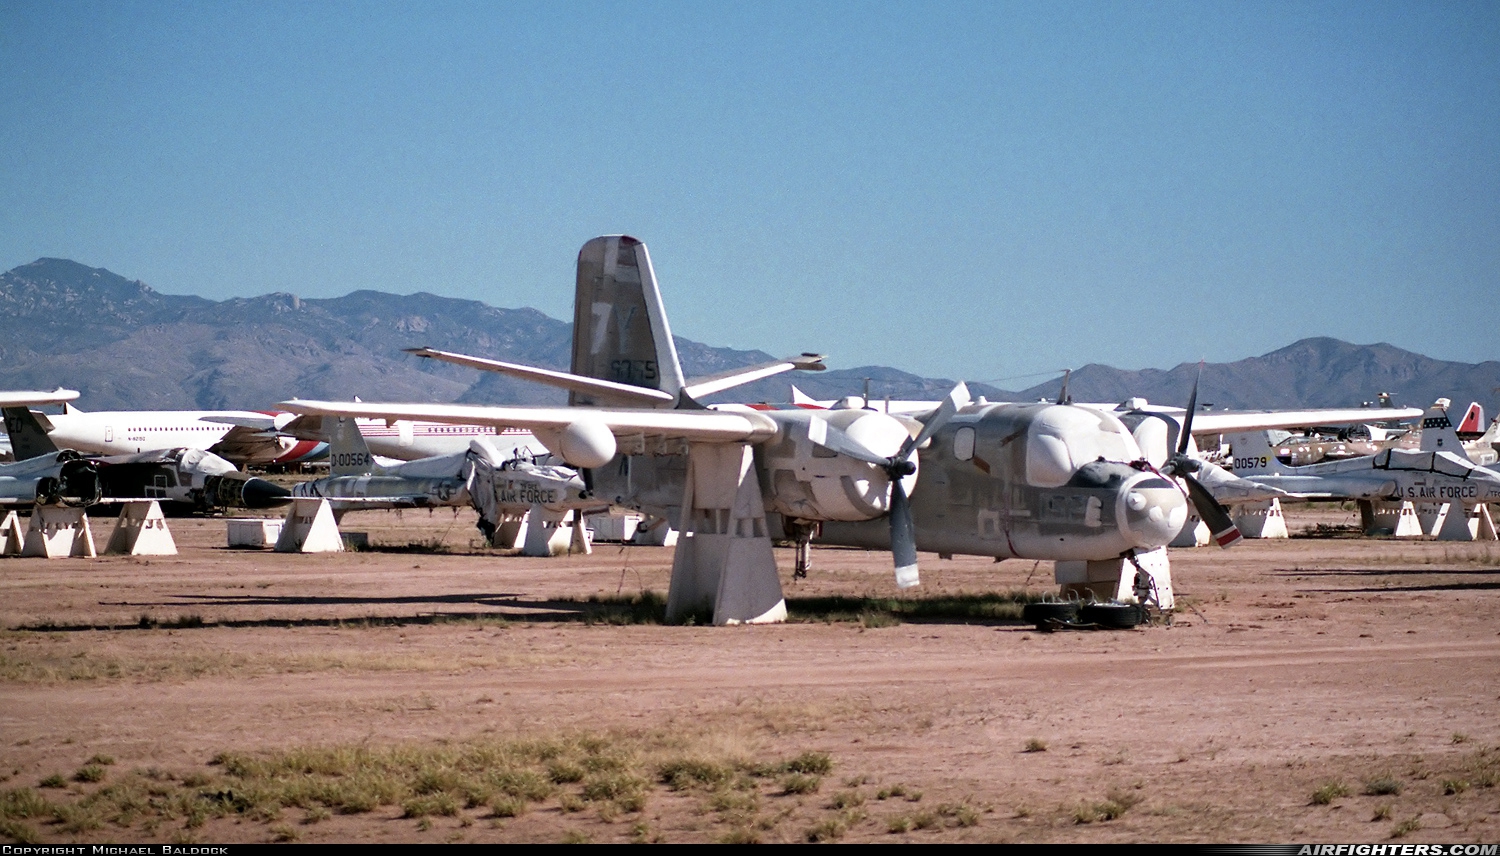 USA - Navy Grumman S-2E Tracker (G-121/S2F-3S) 149855 at Tucson - Davis-Monthan AFB (DMA / KDMA), USA